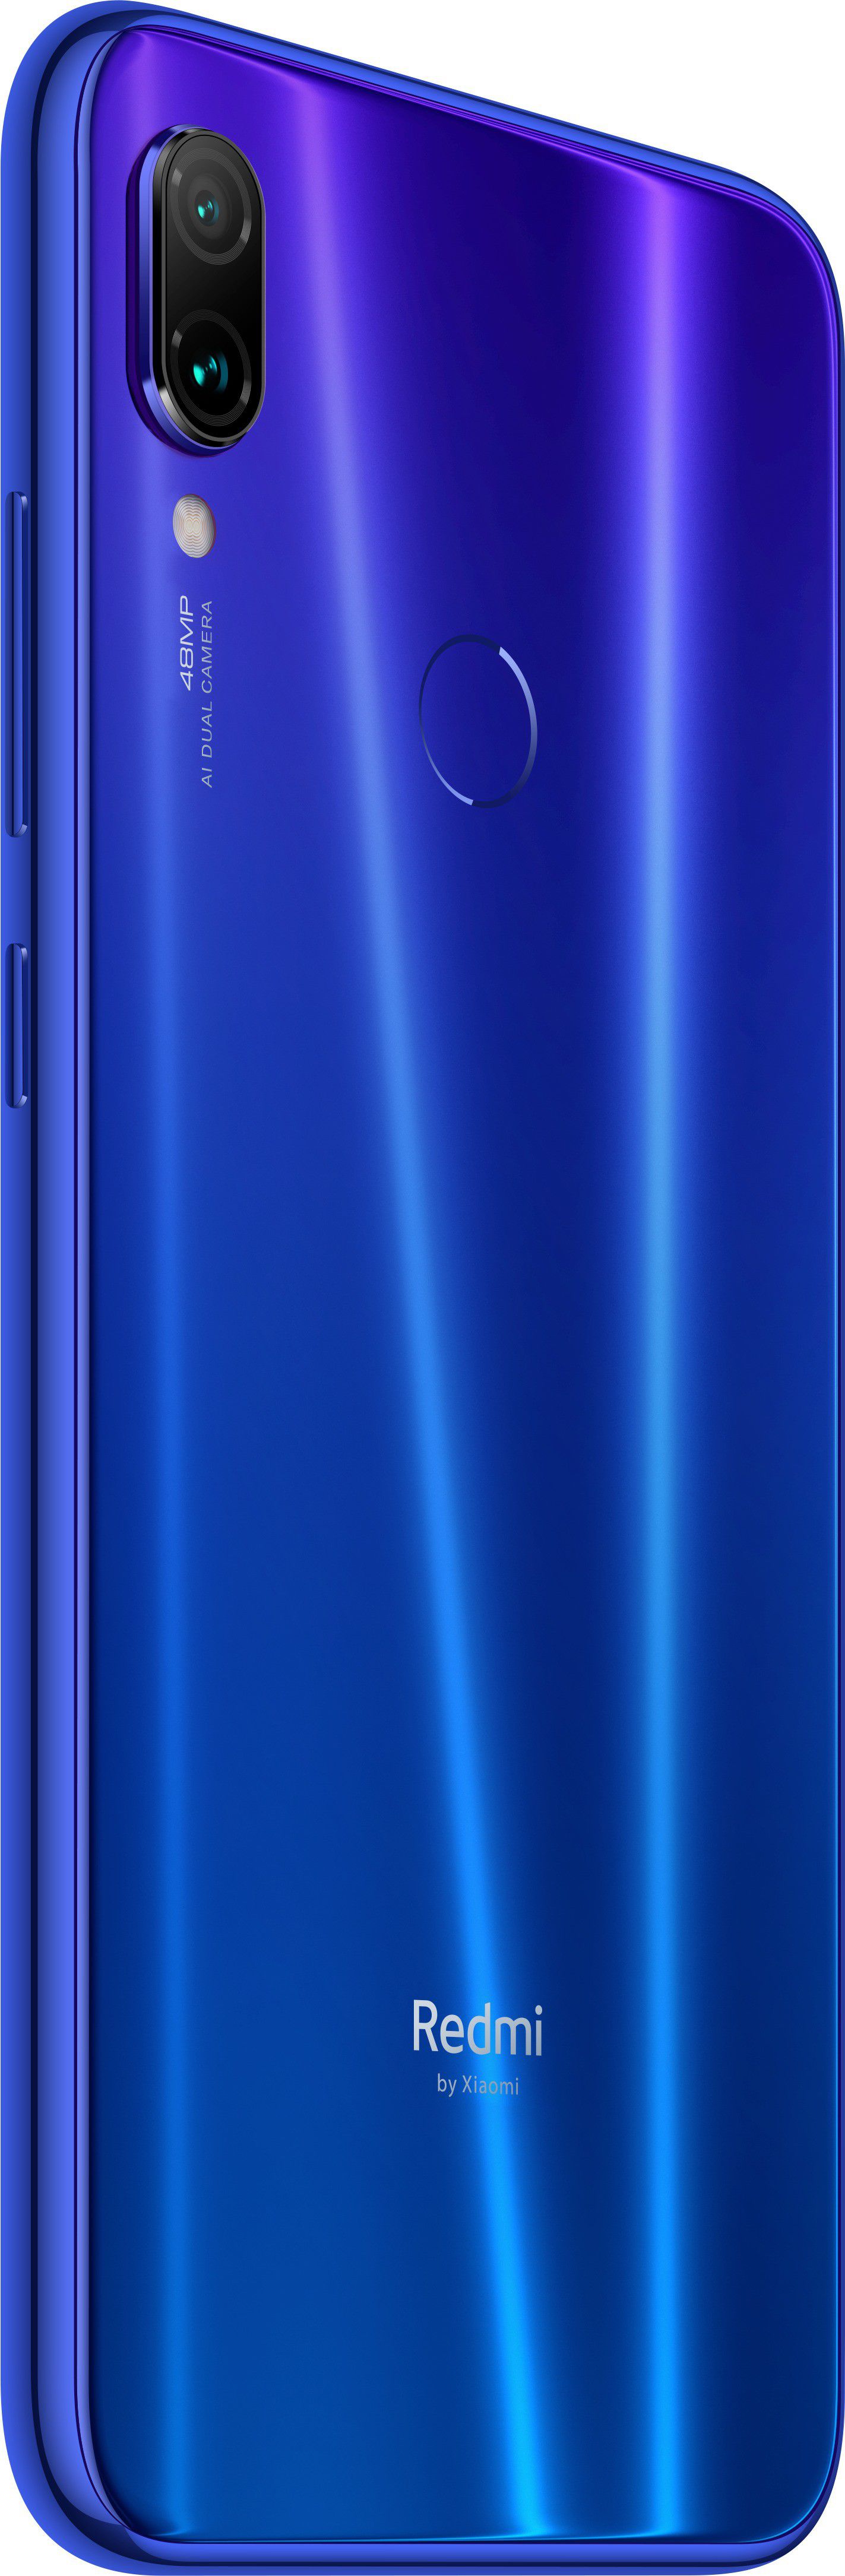 MI Note 7 Pro (6GB RAM) ( 128GB , 6 GB ) Blue Mobile